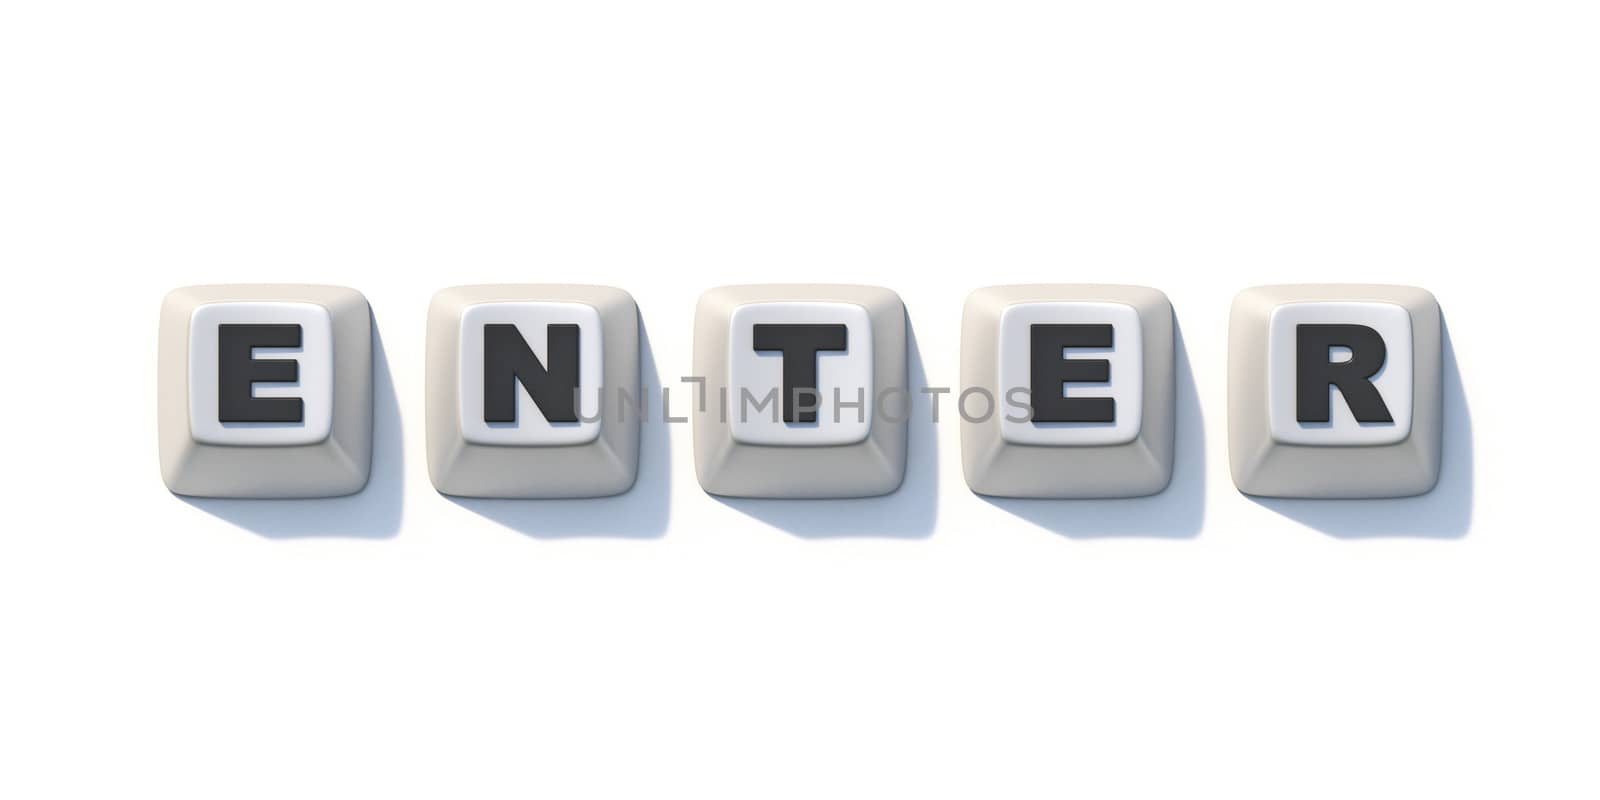 Word ENTER made of white computer keys 3D render illustration isolated on white background